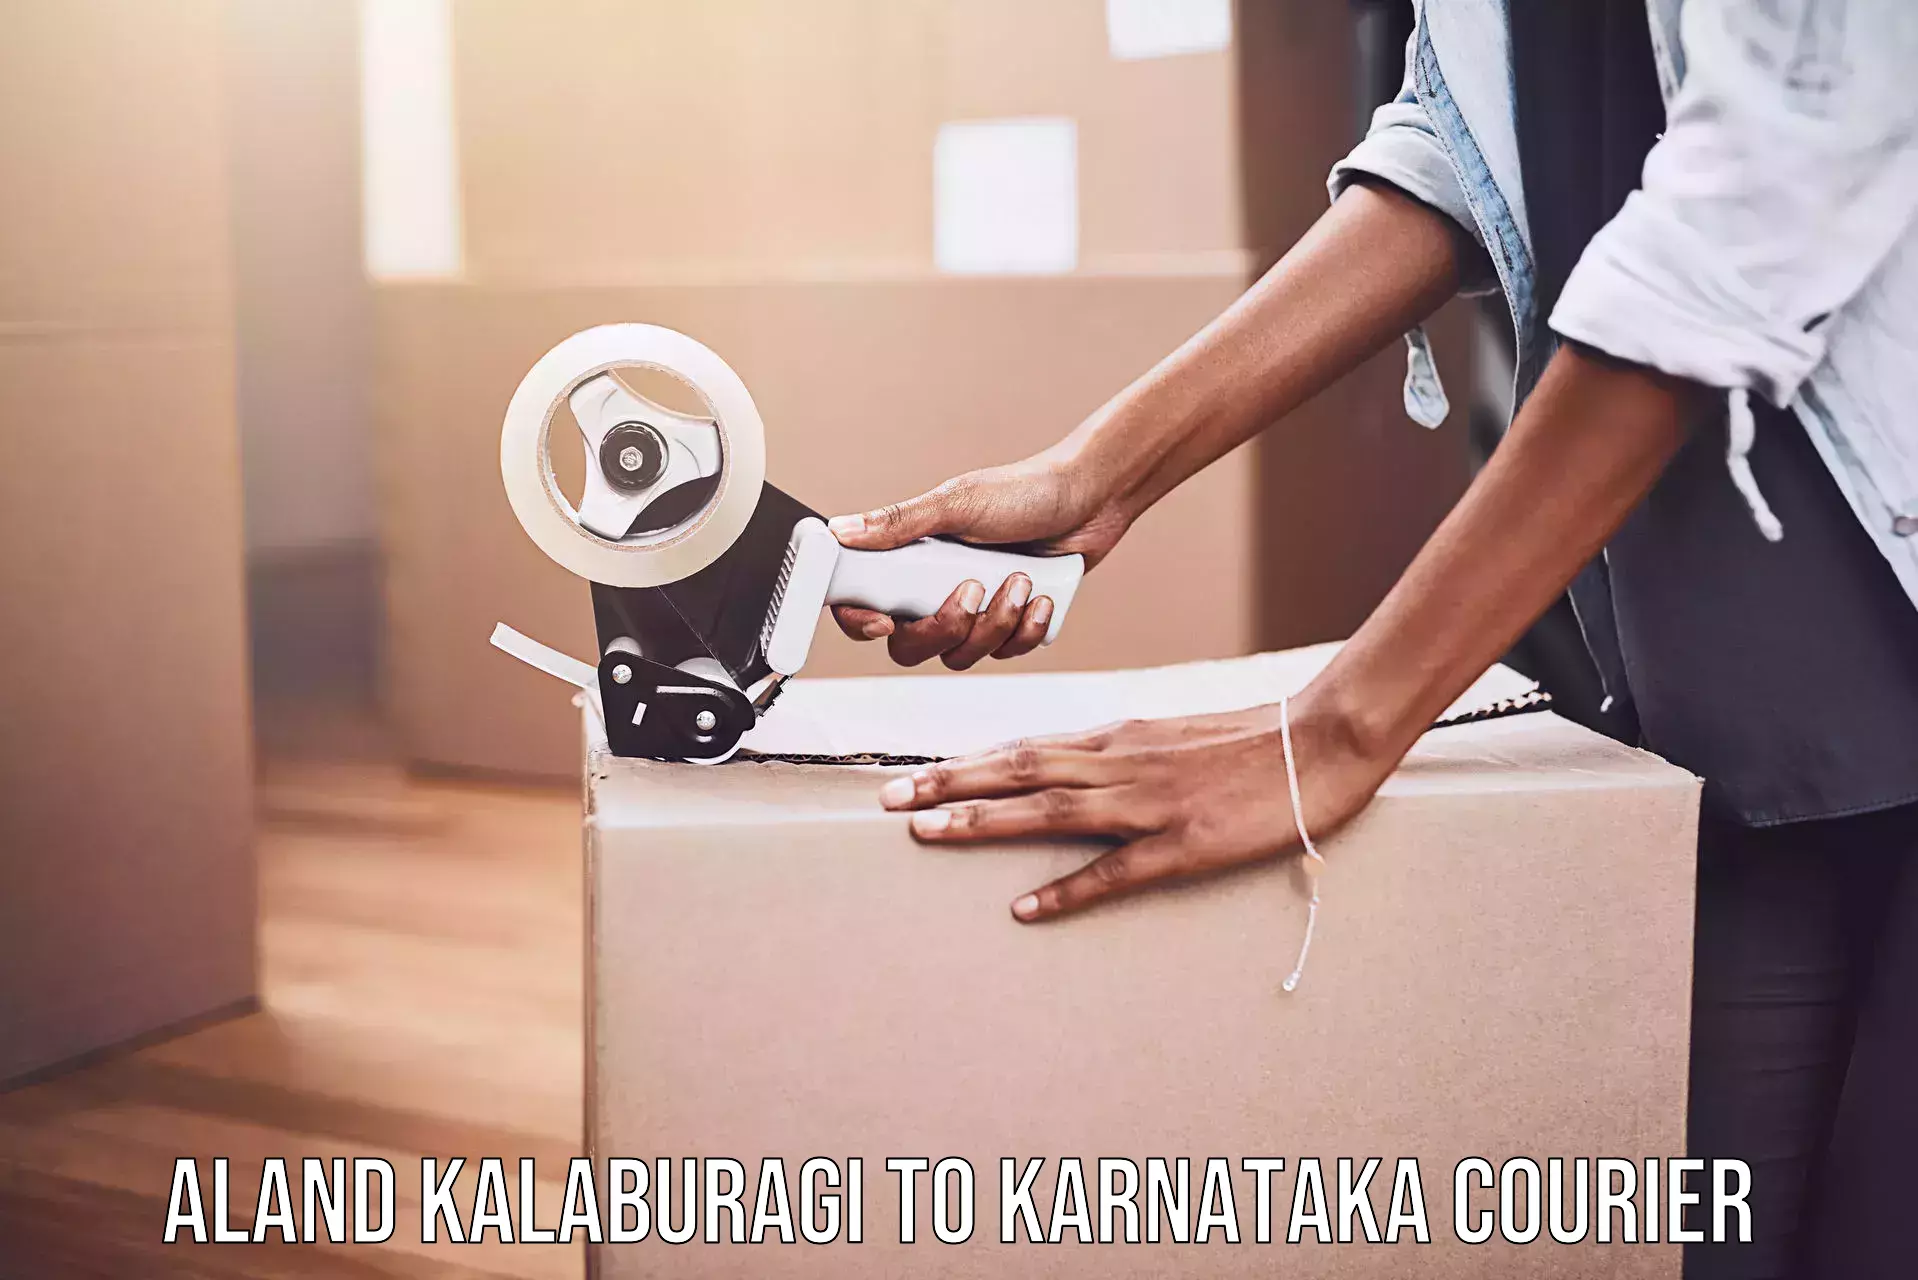 Nationwide delivery network Aland Kalaburagi to Mannaekhelli